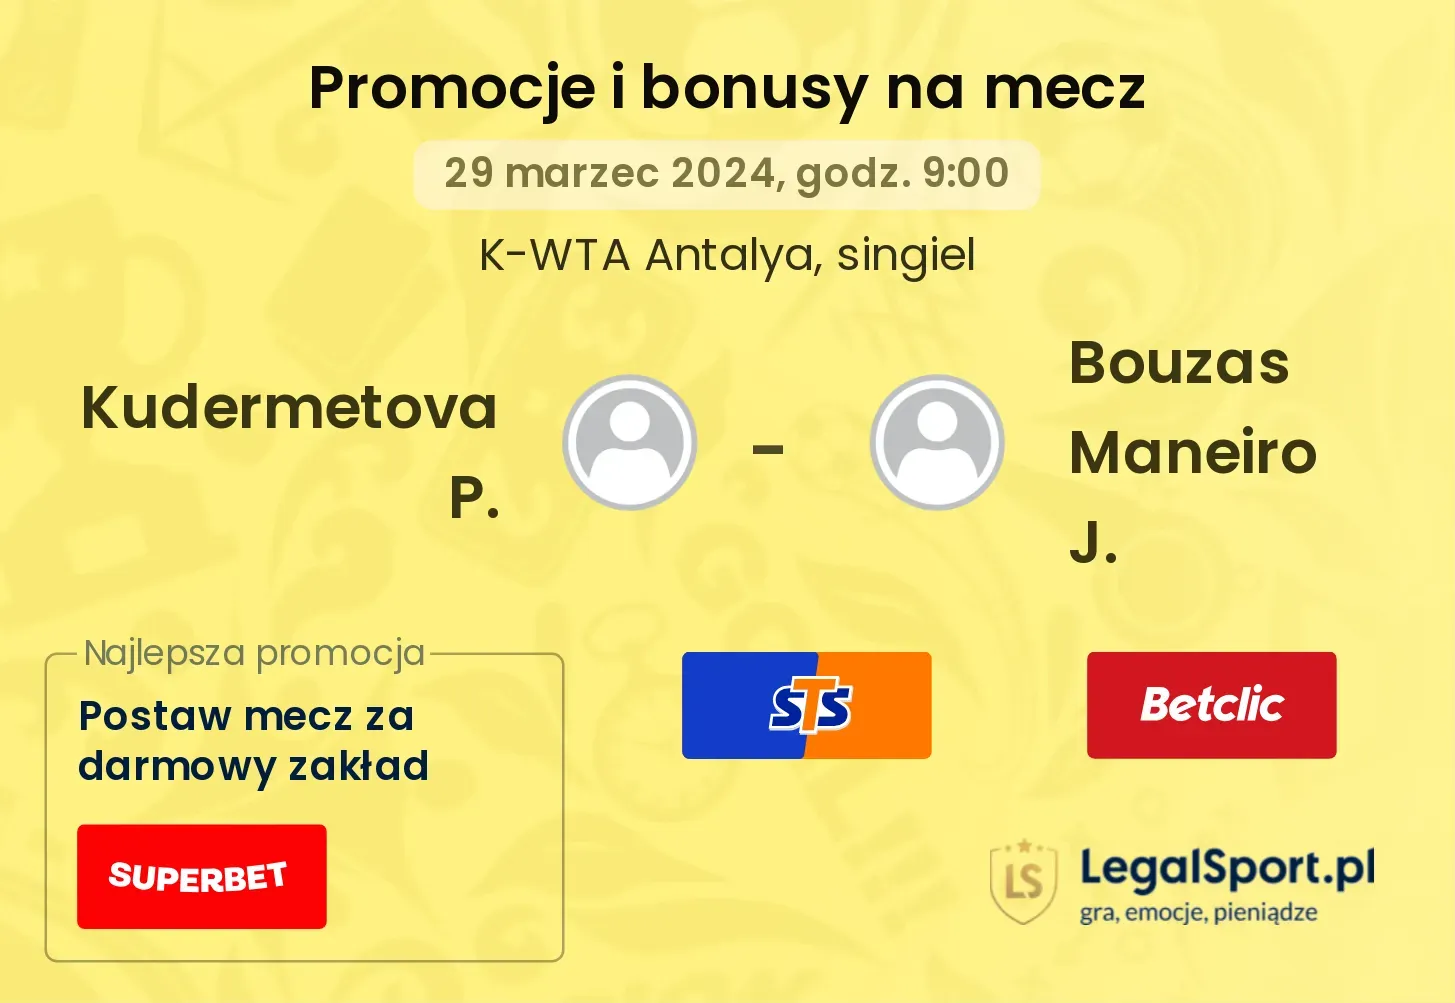 Kudermetova P. - Bouzas Maneiro J. promocje bonusy na mecz